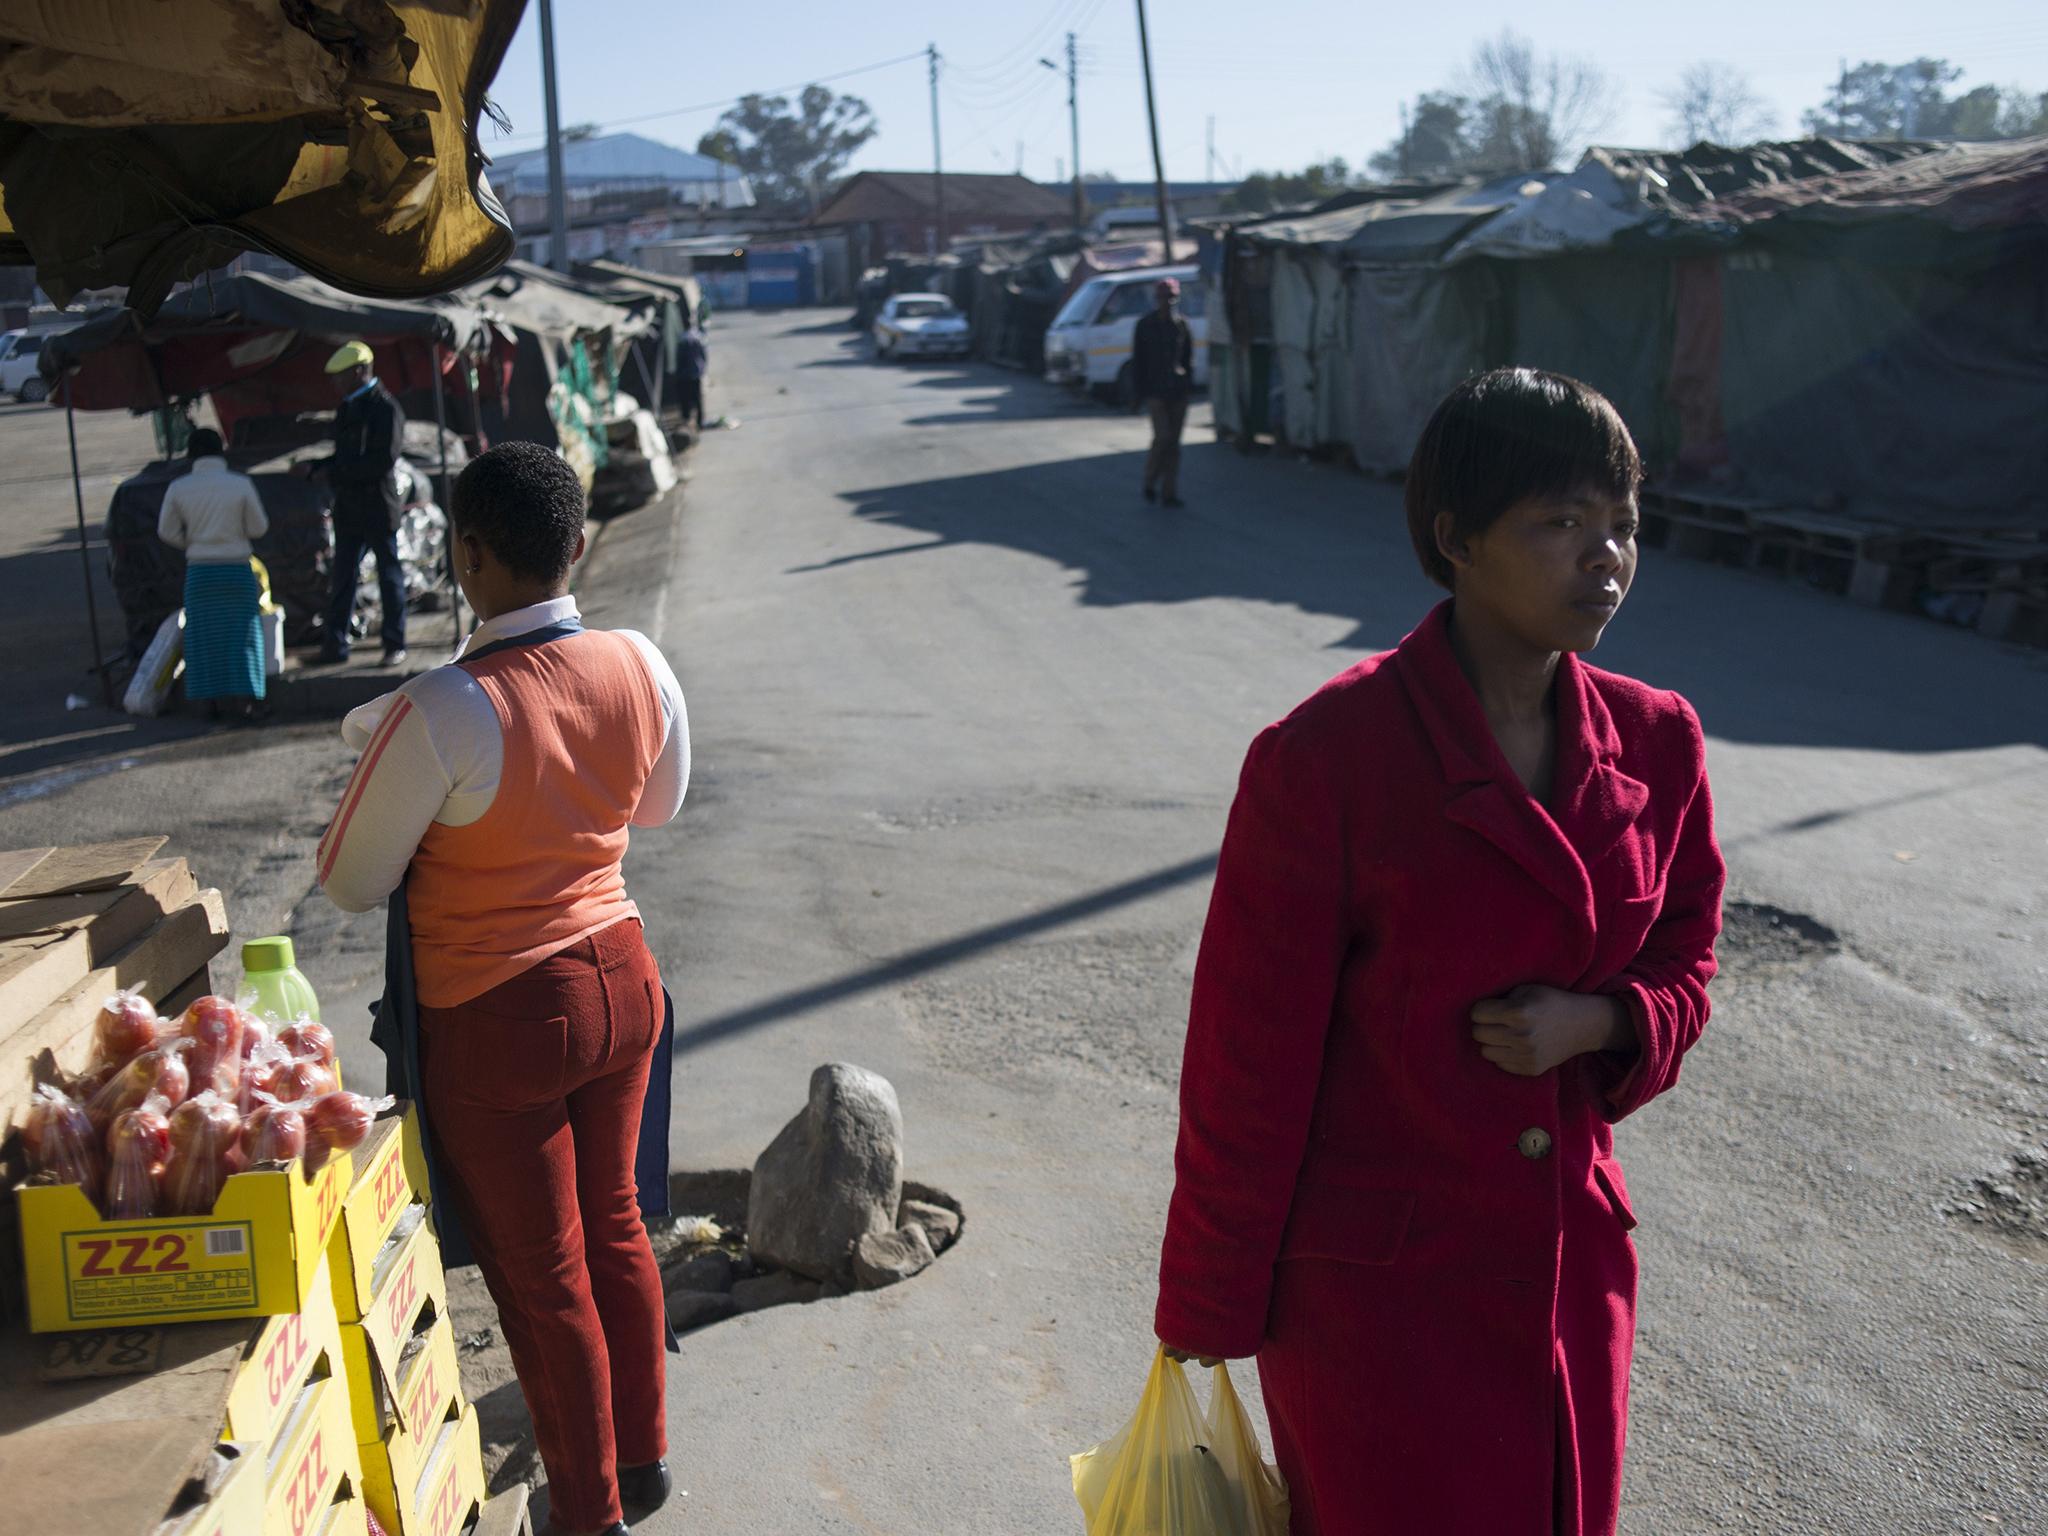 A marketplace in Maseru, Lesotho